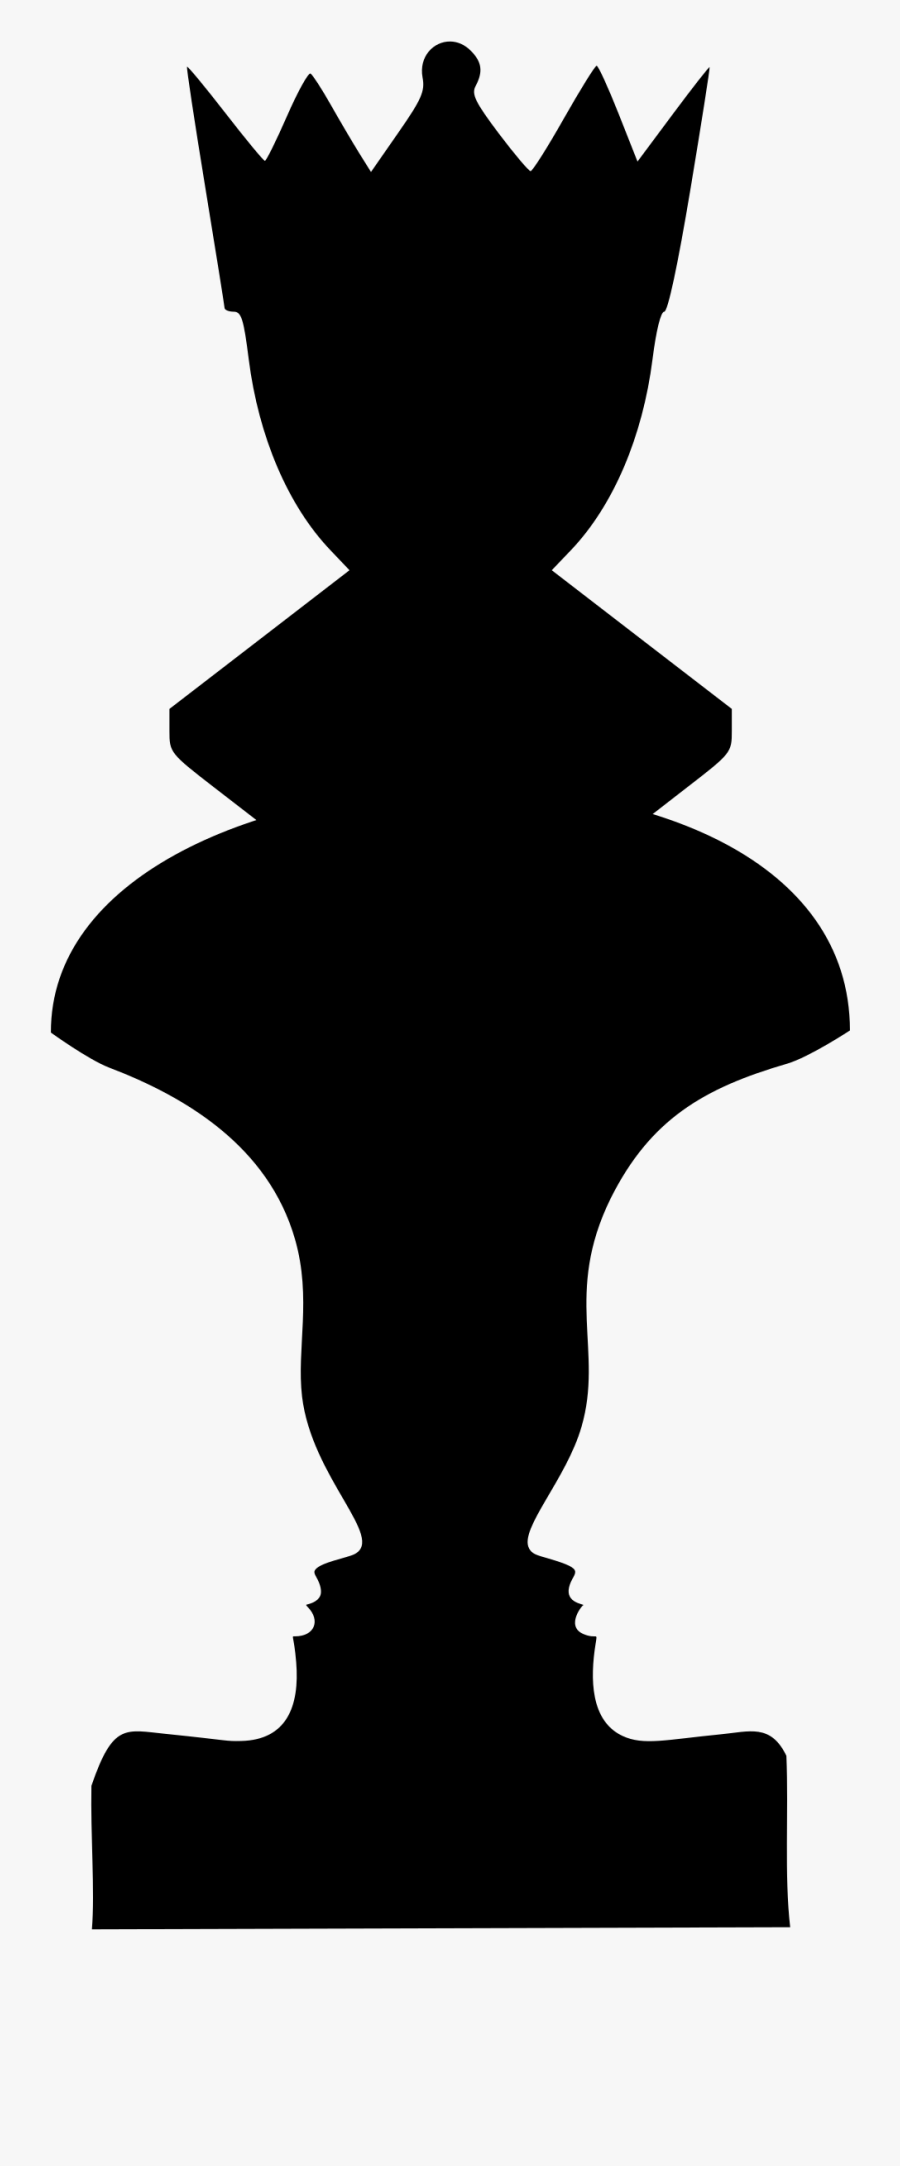 Clipart - Queen Chess Piece Vector, Transparent Clipart